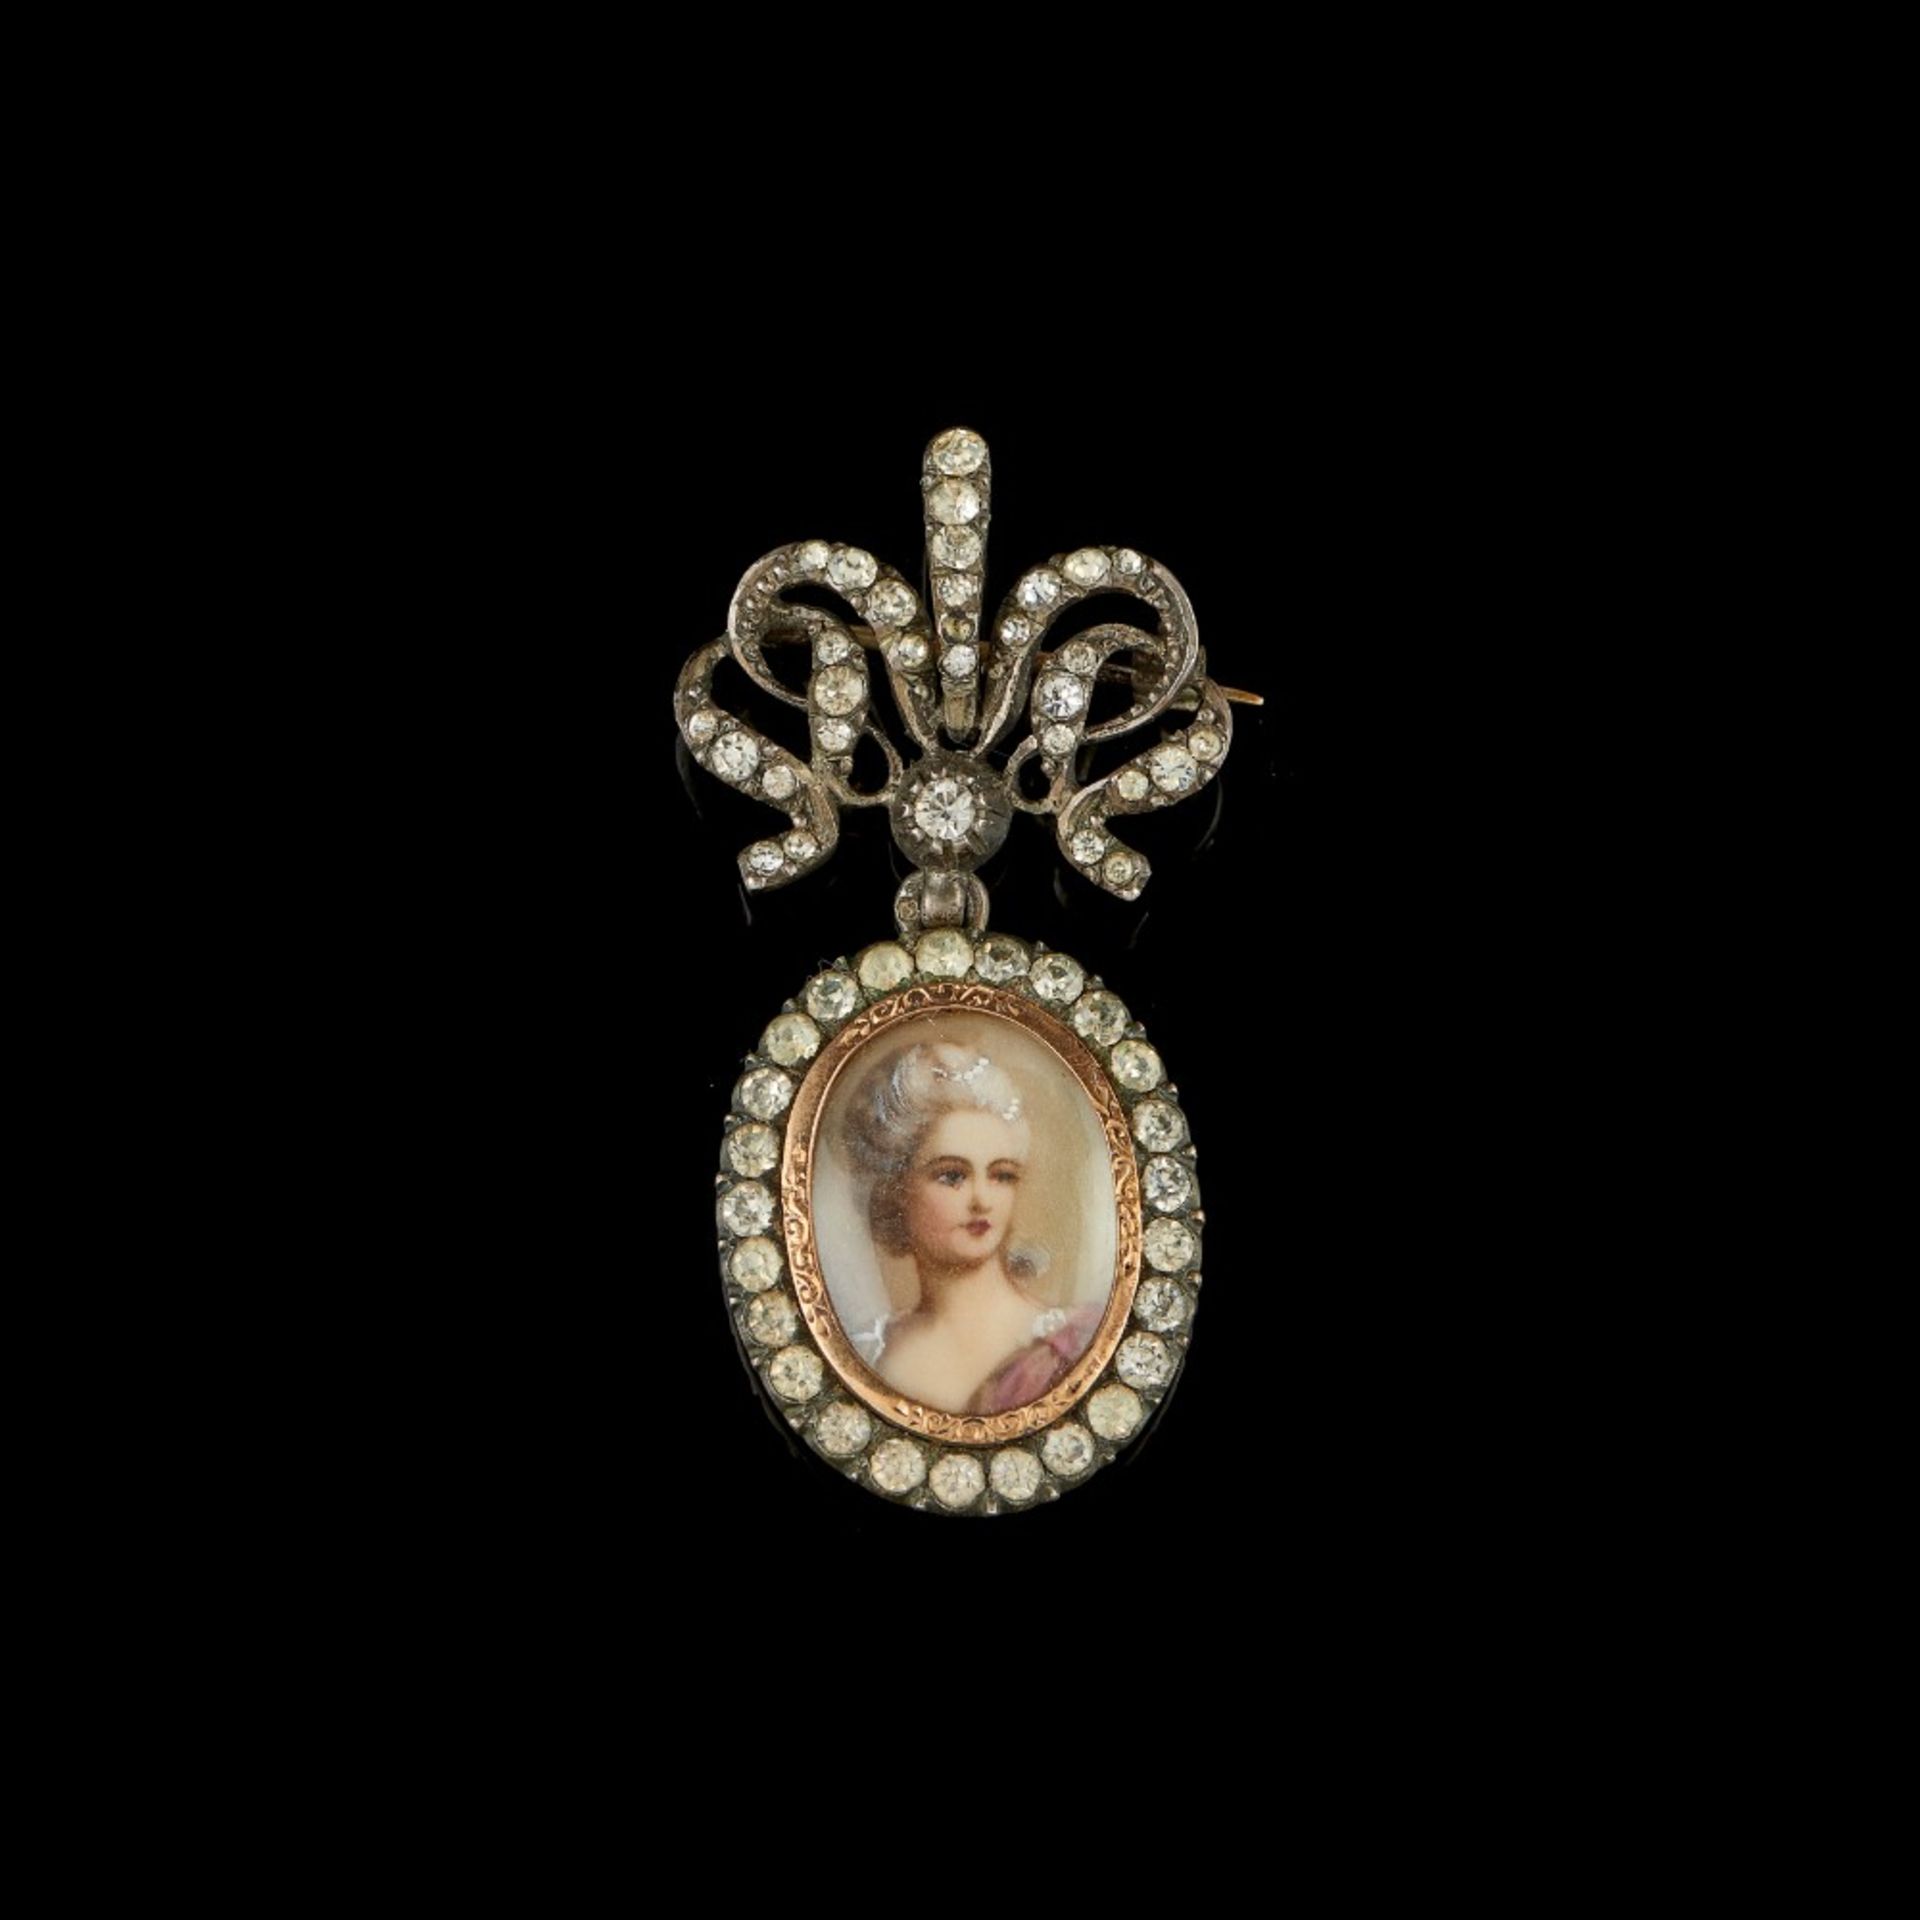  A brooch / pendant